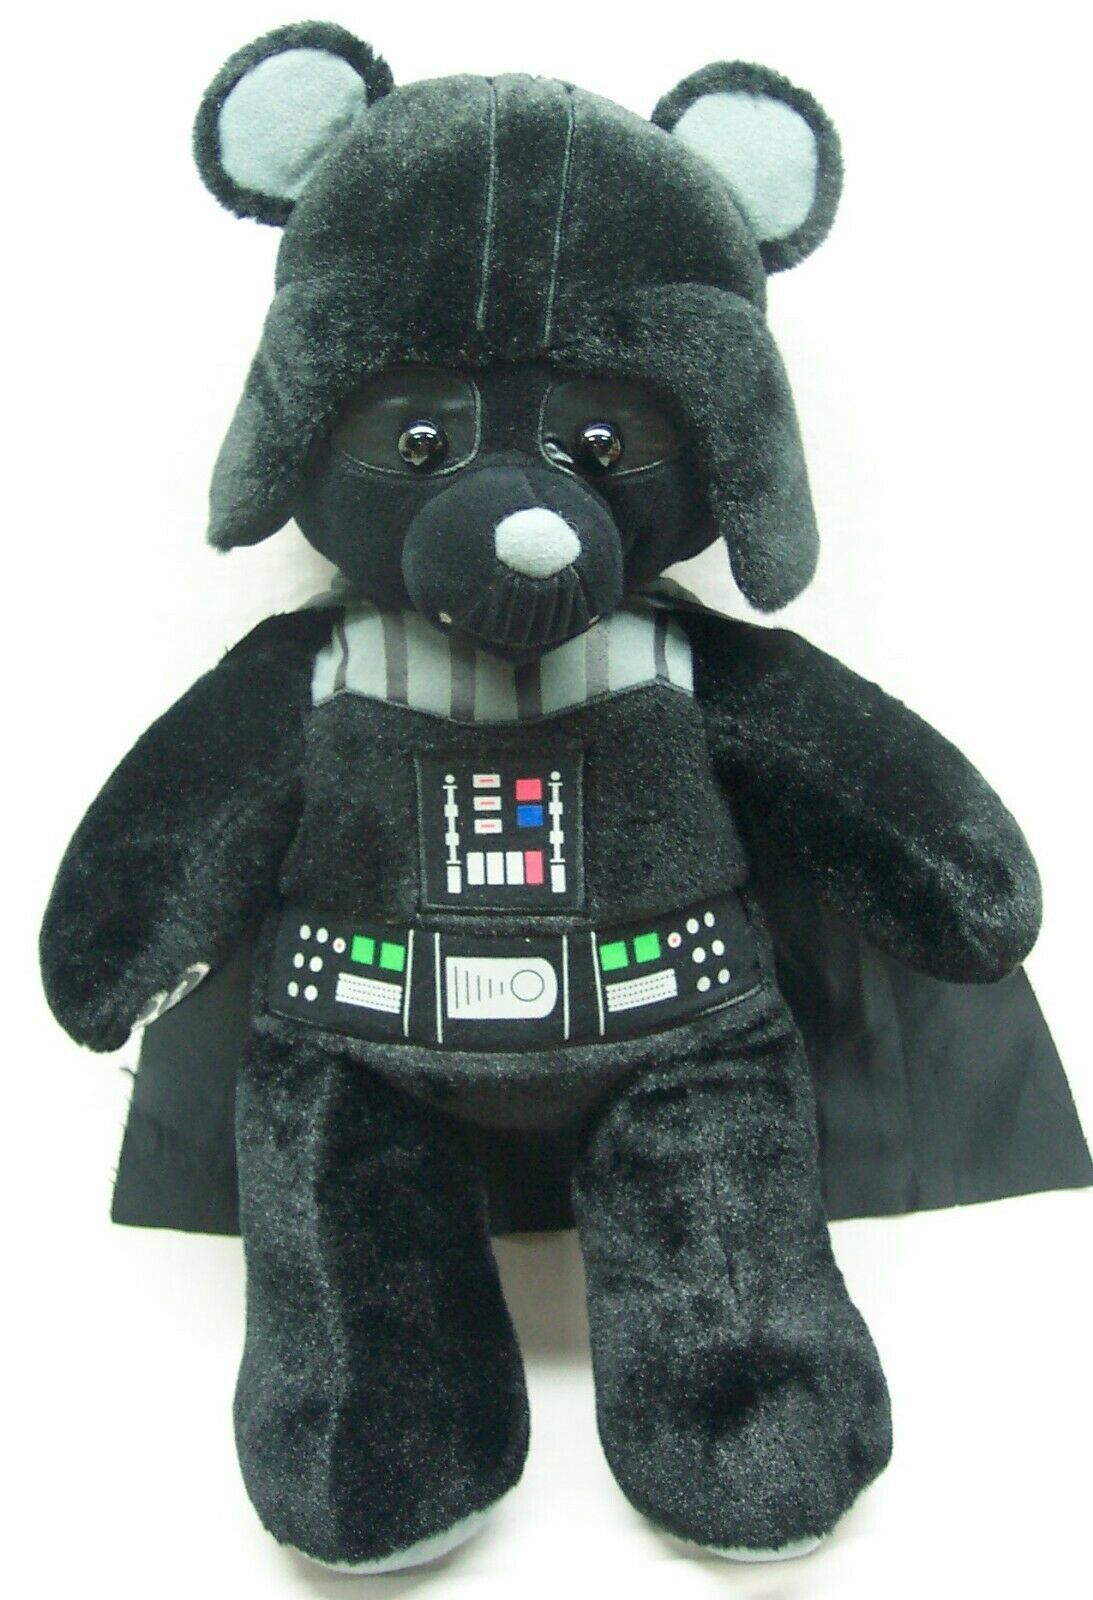 teddy bears from star wars